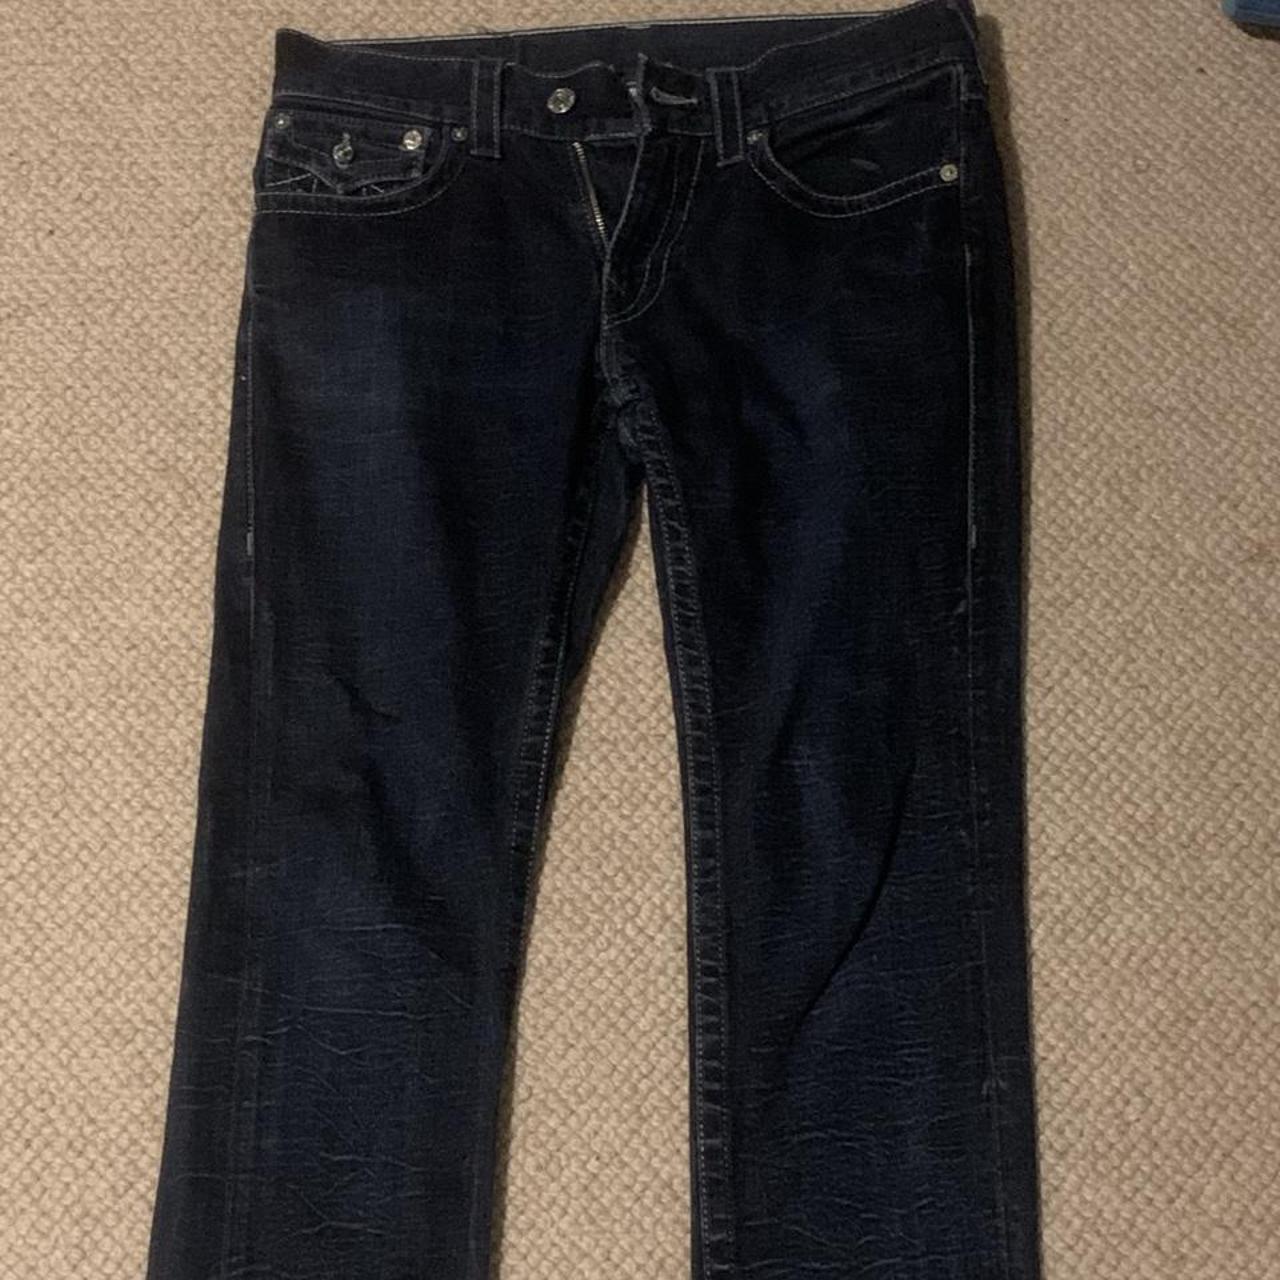 True religion navy skinny jeans 31”, in great condition - Depop